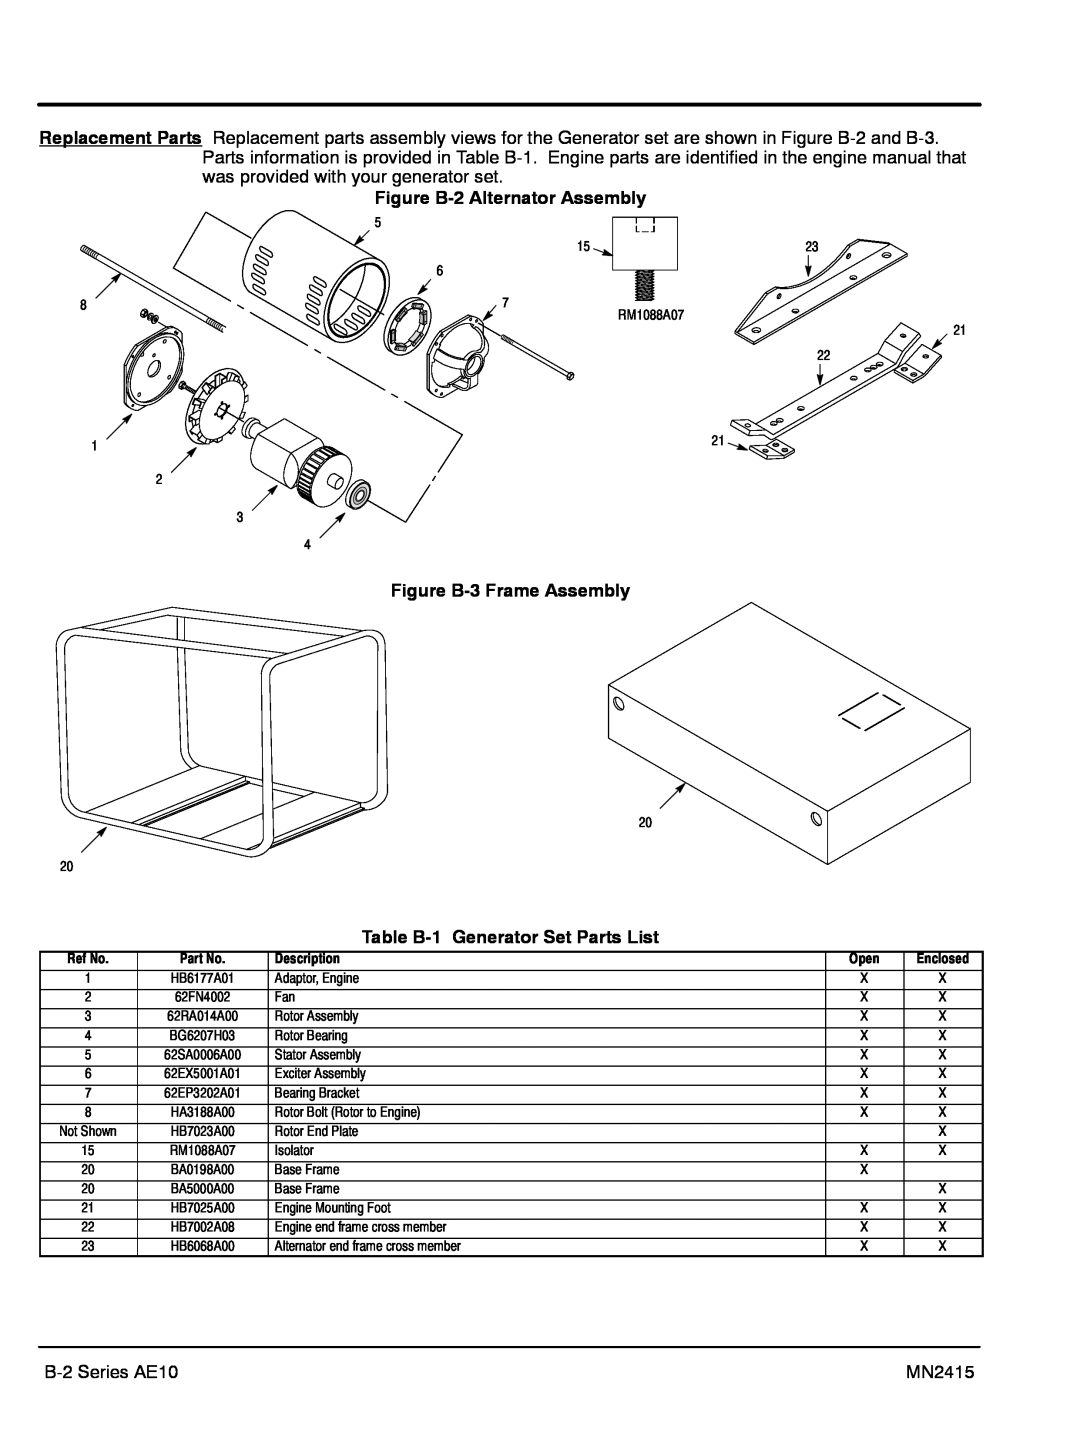 Baldor AE11, AE10, AE25, AE8 Figure B-2 Alternator Assembly, Figure B-3 Frame Assembly, Table B-1 Generator Set Parts List 